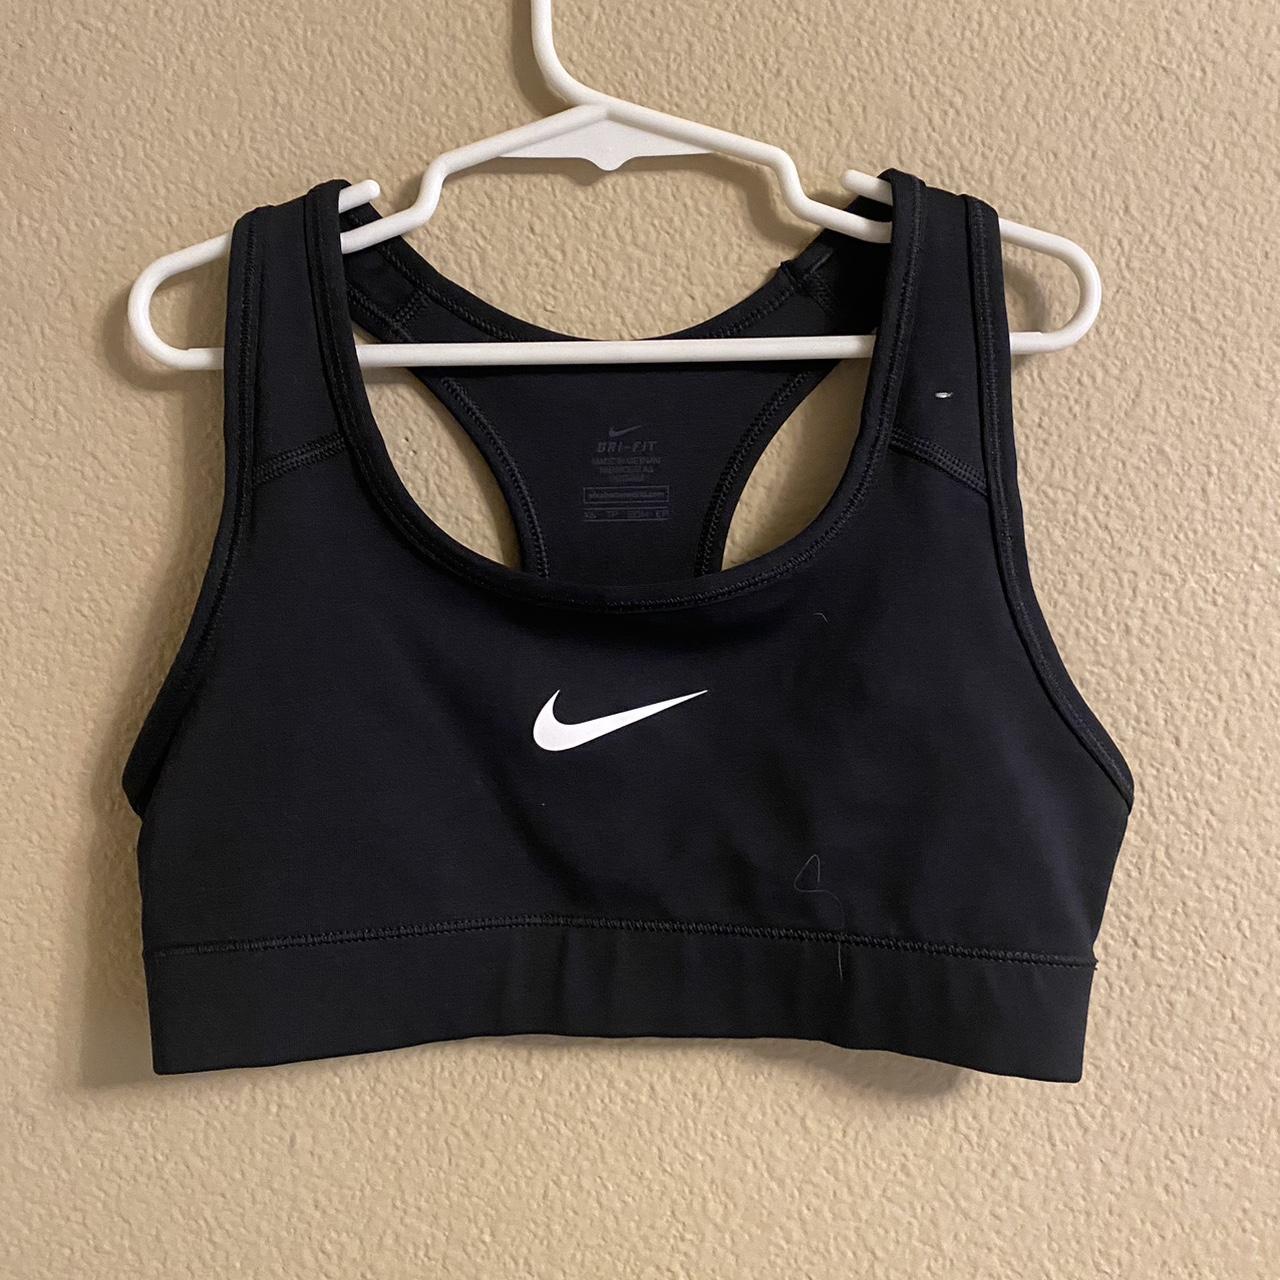 Nike sports bra. I’m great condition.